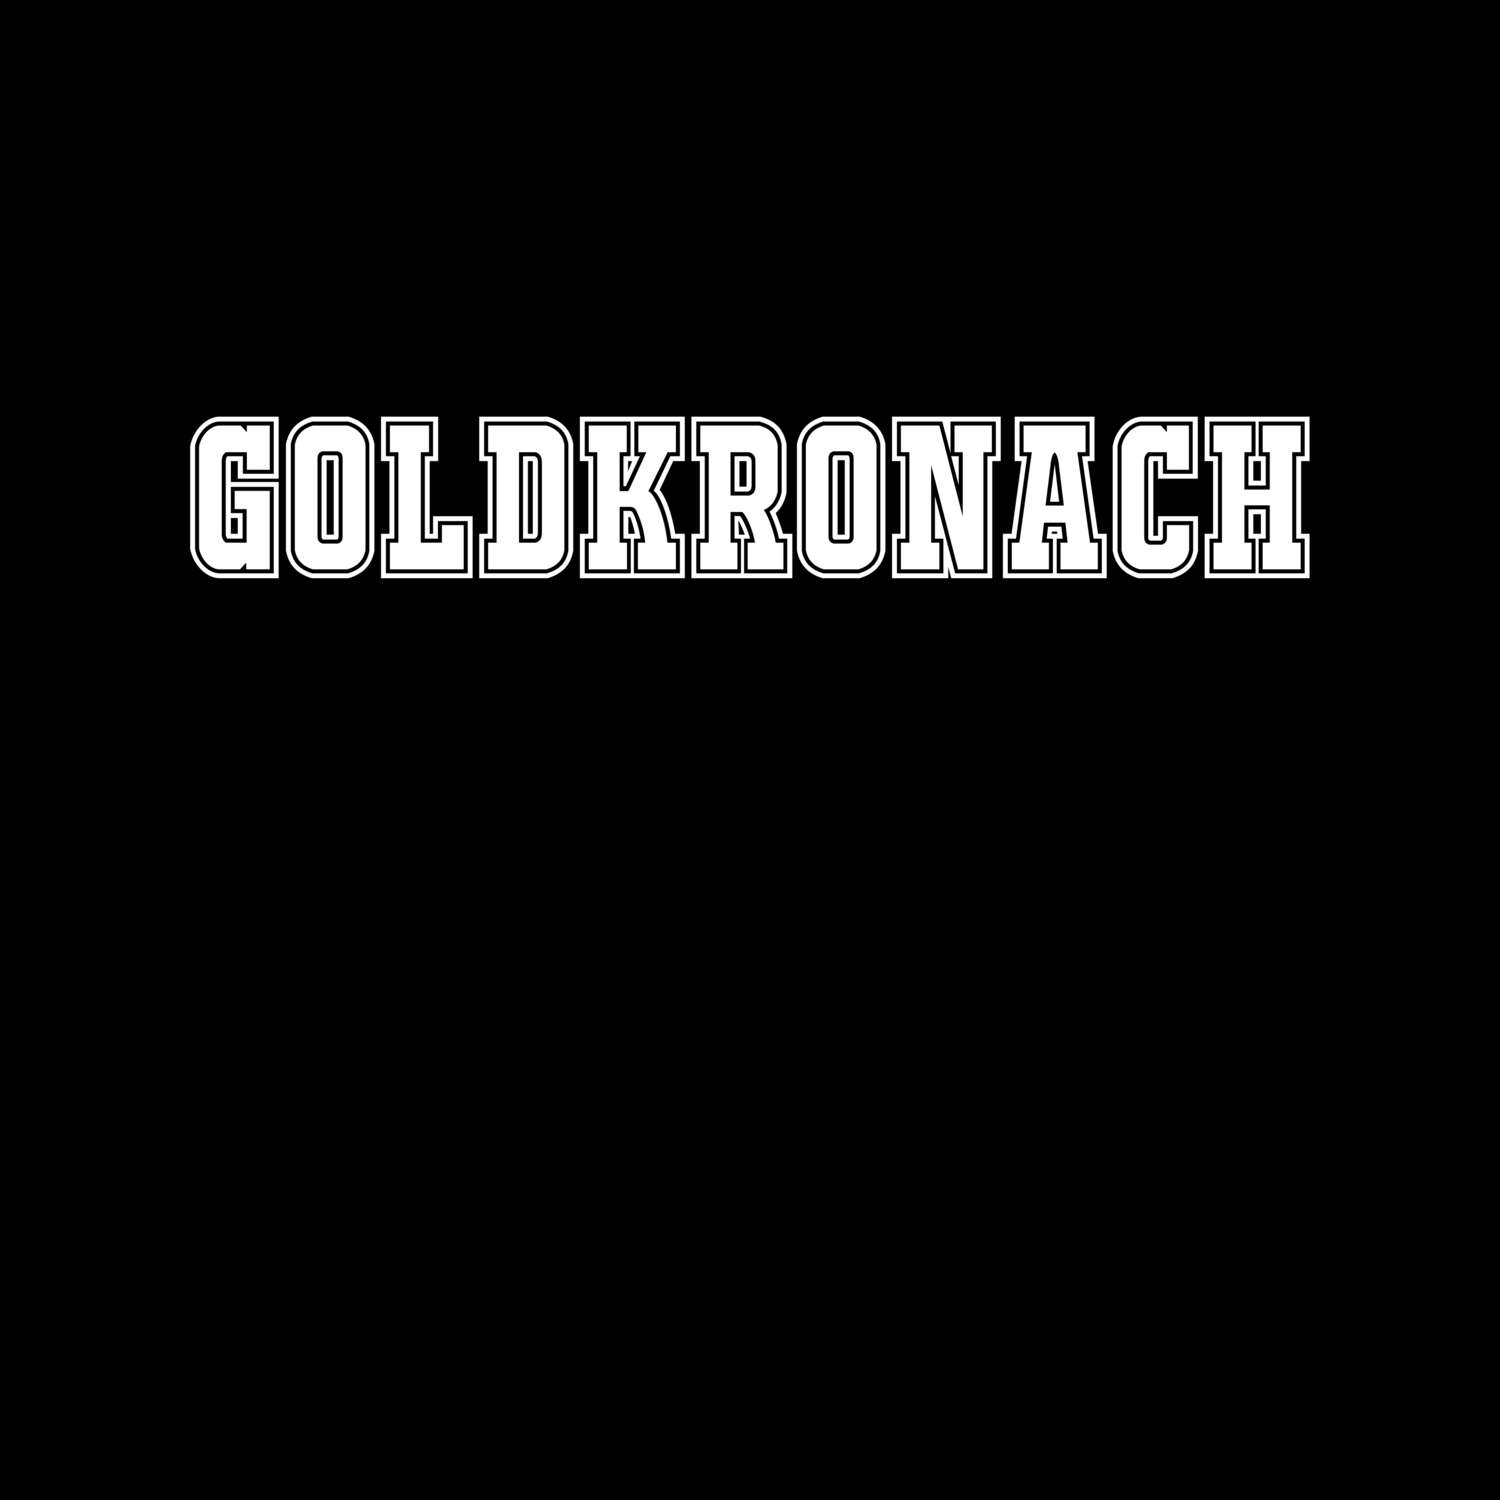 Goldkronach T-Shirt »Classic«